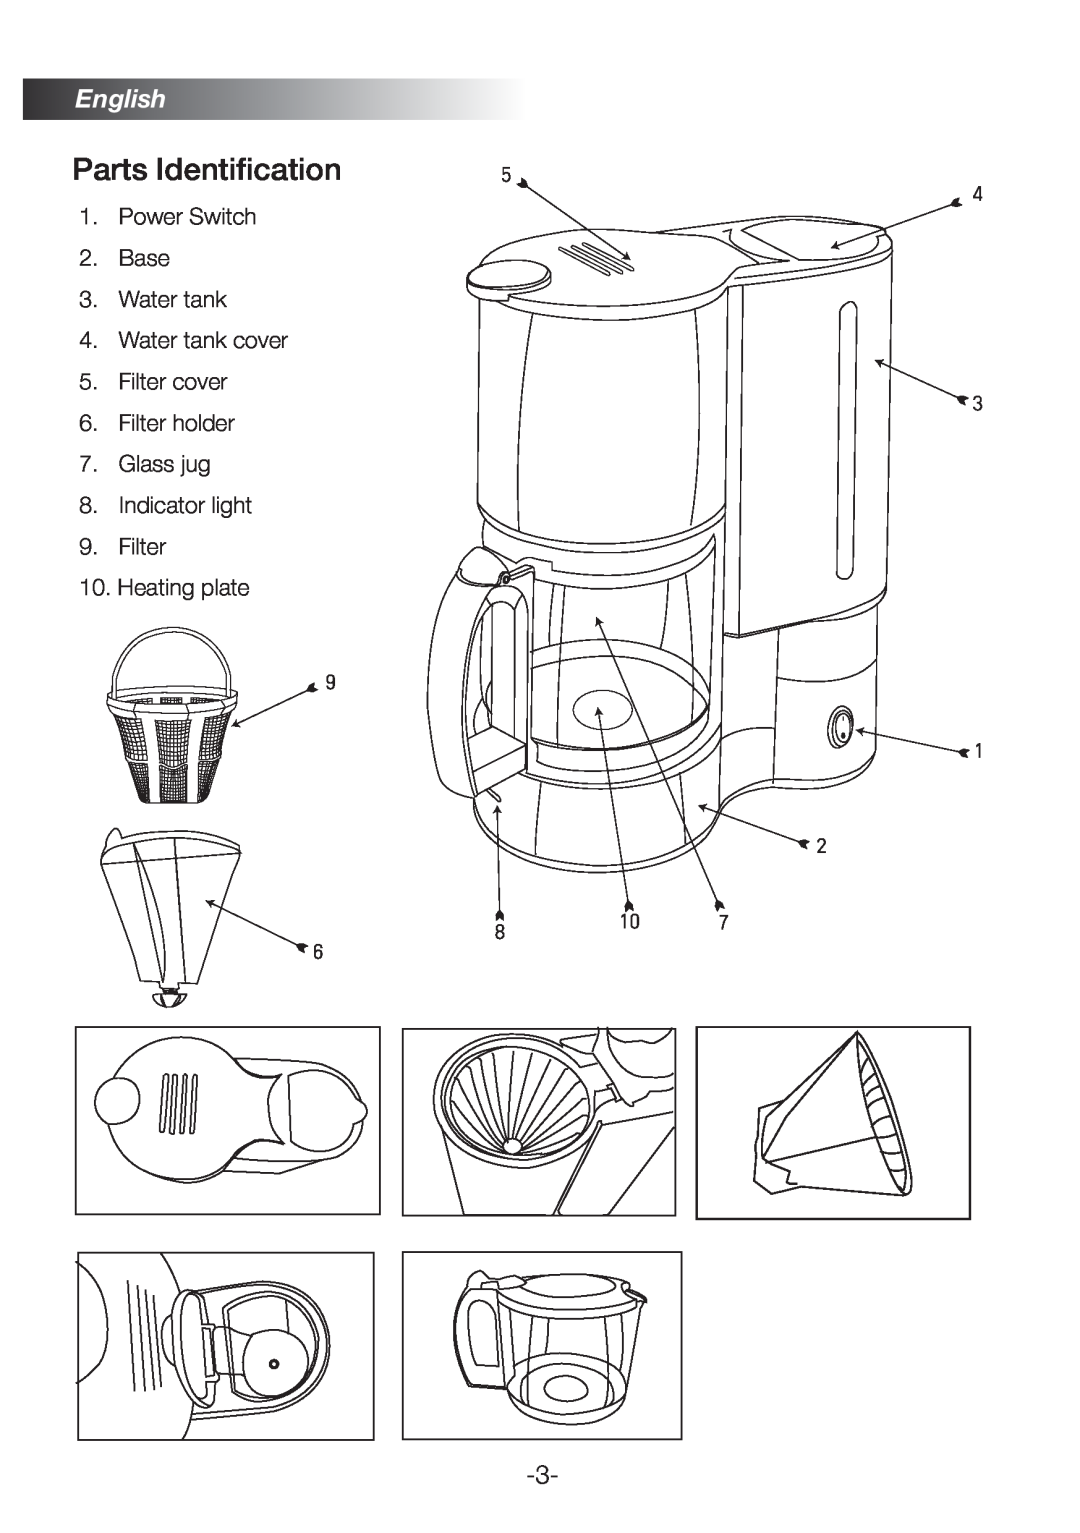 Black & Decker LCM82 Parts Identification, English, Power Switch 2.Base 3.Water tank, Glass jug 8.Indicator light 9.Filter 